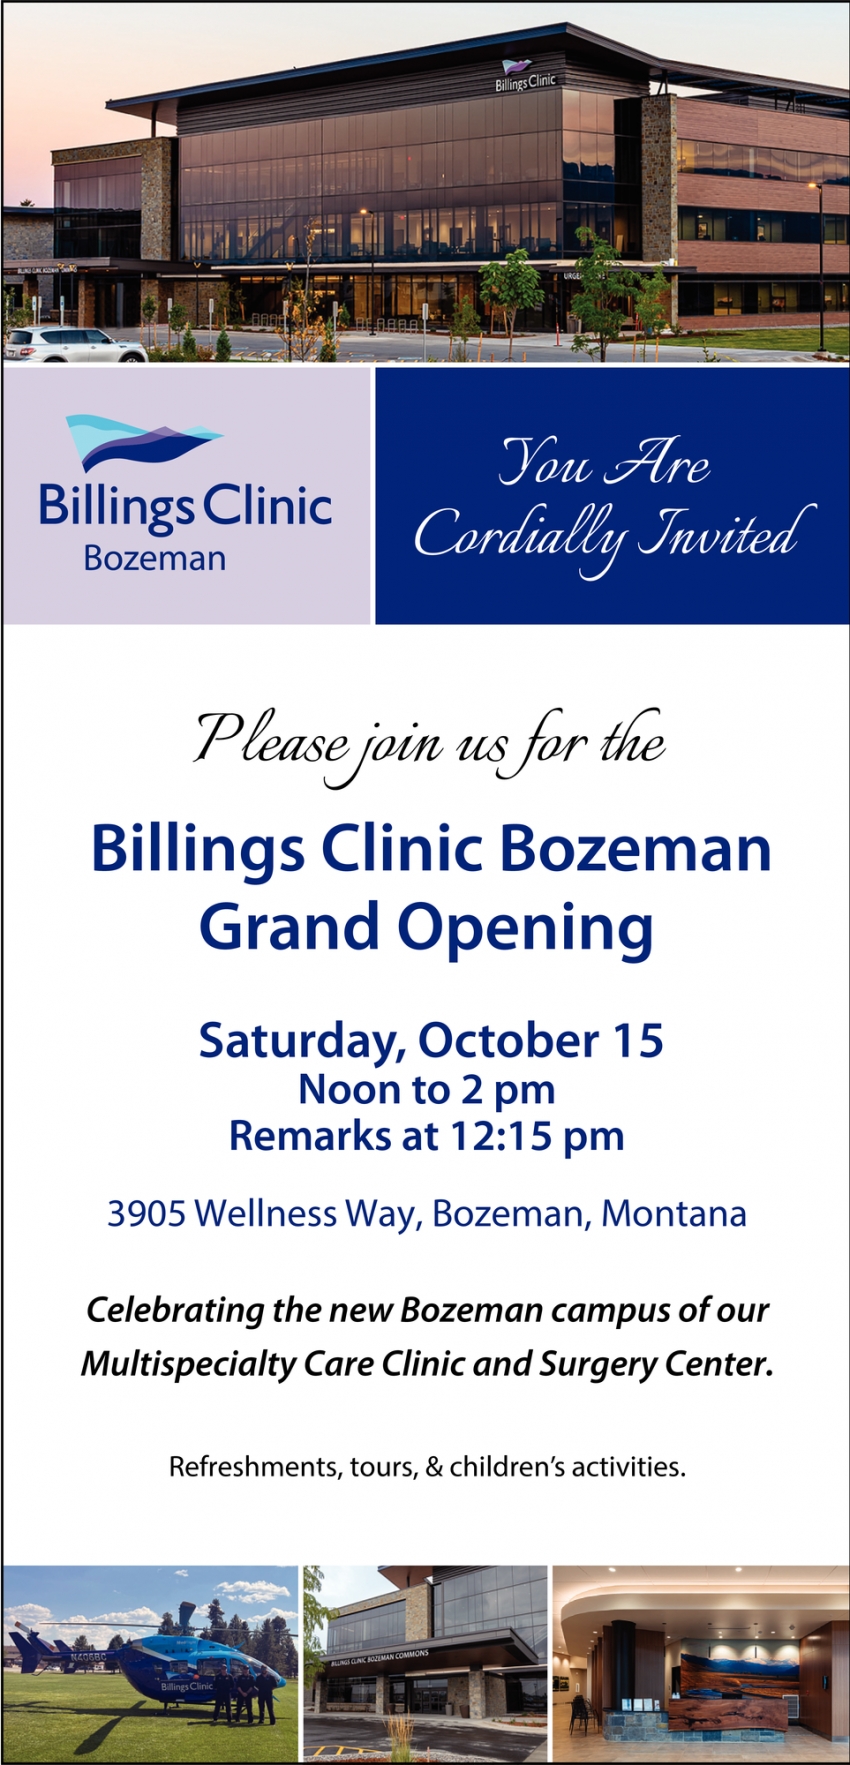 Billings Clinic Bozeman Grand Opening